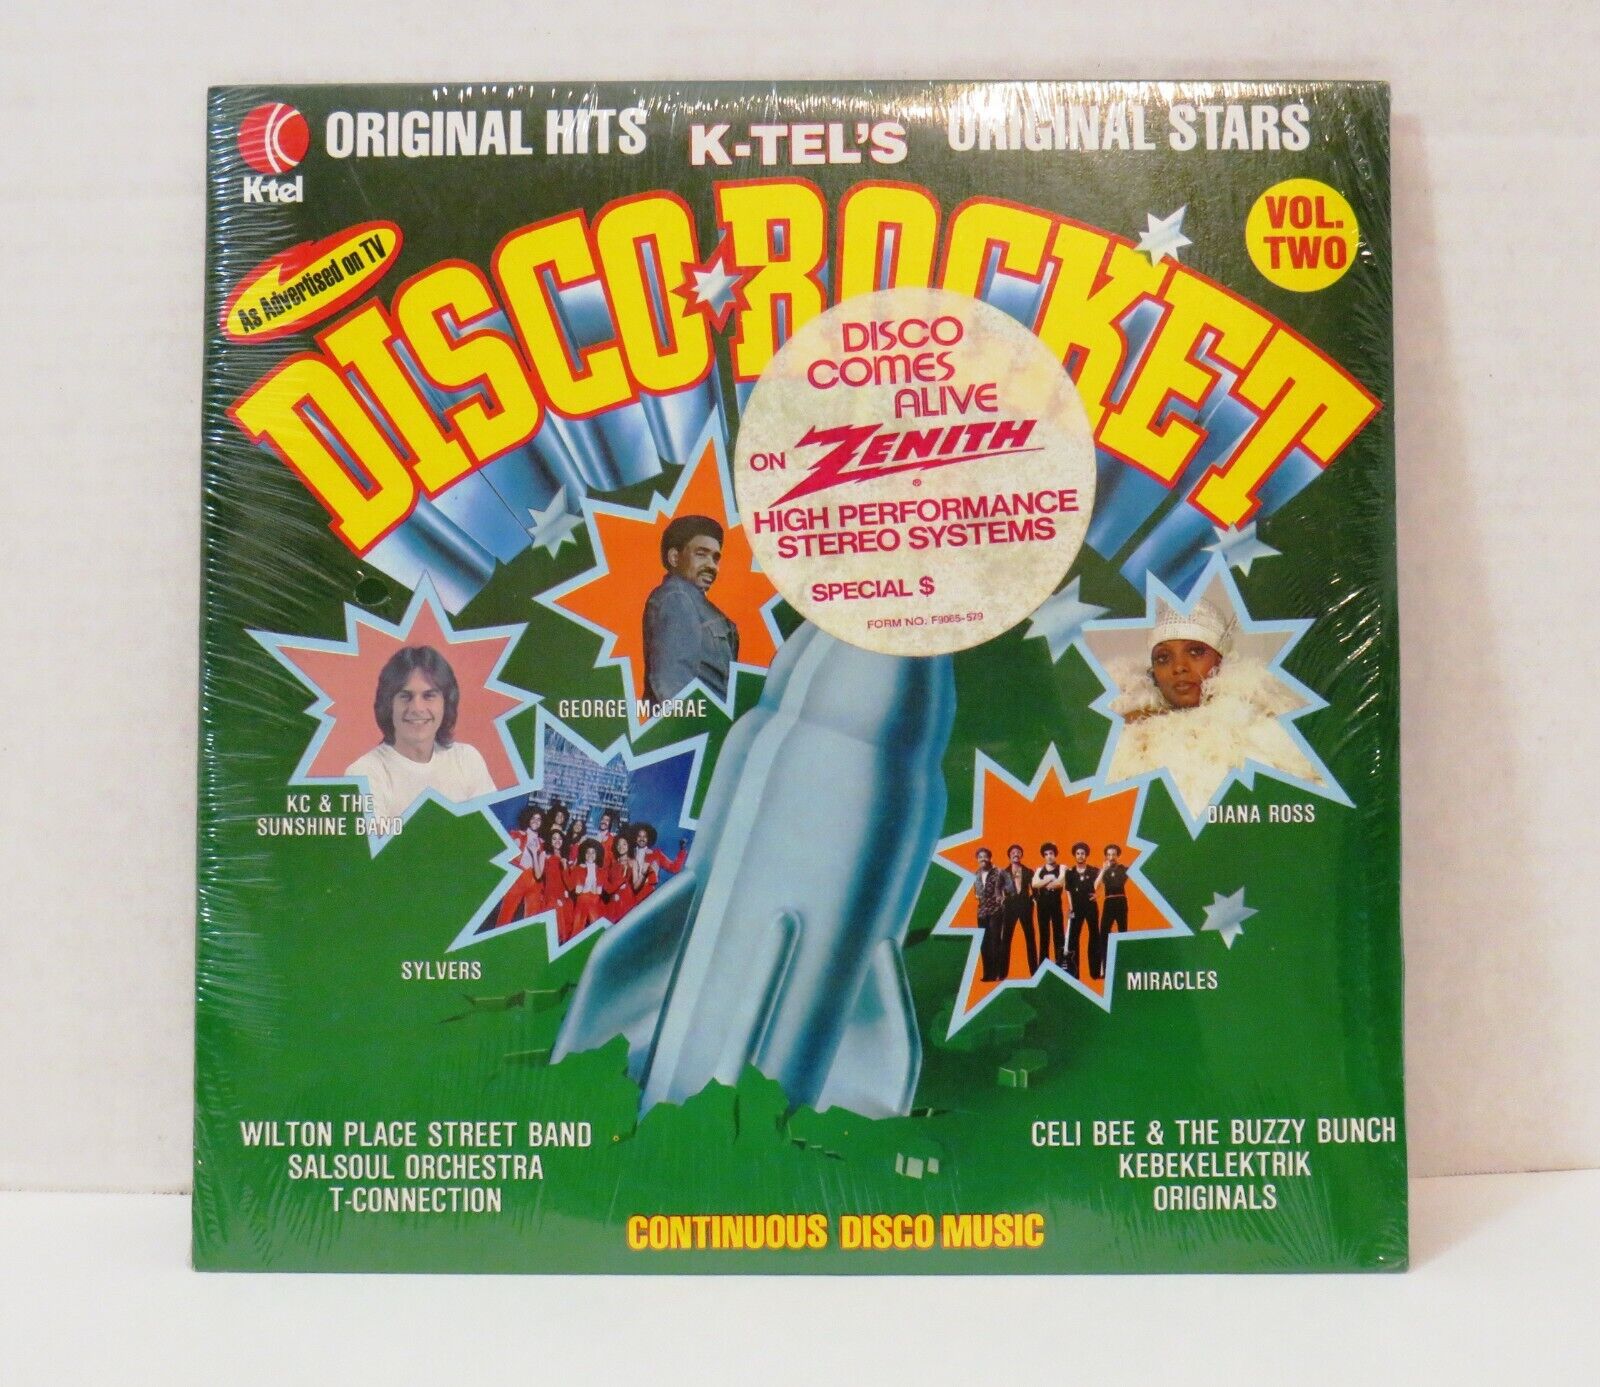 New/Factory Sealed Vintage 1978 K-tel Disco Rocket Vol.Two Record Album TU 2572